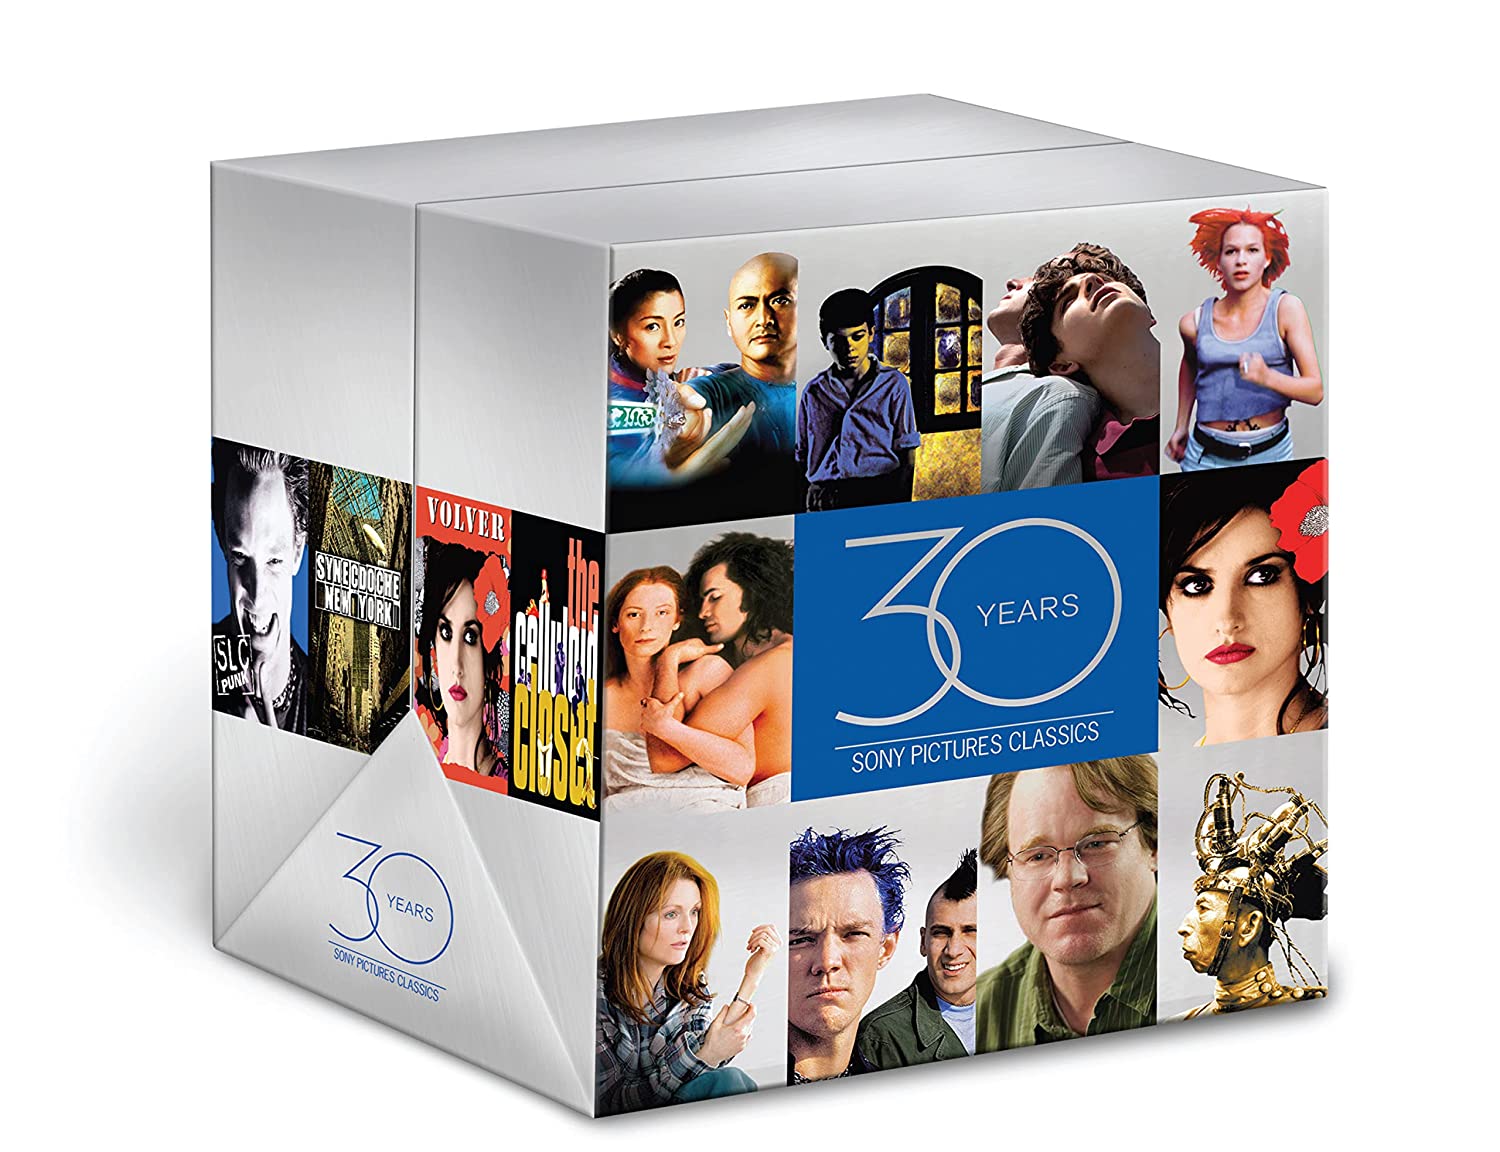 Sony Pictures Classics 30th Anniversary Box Set Buy on Amazon